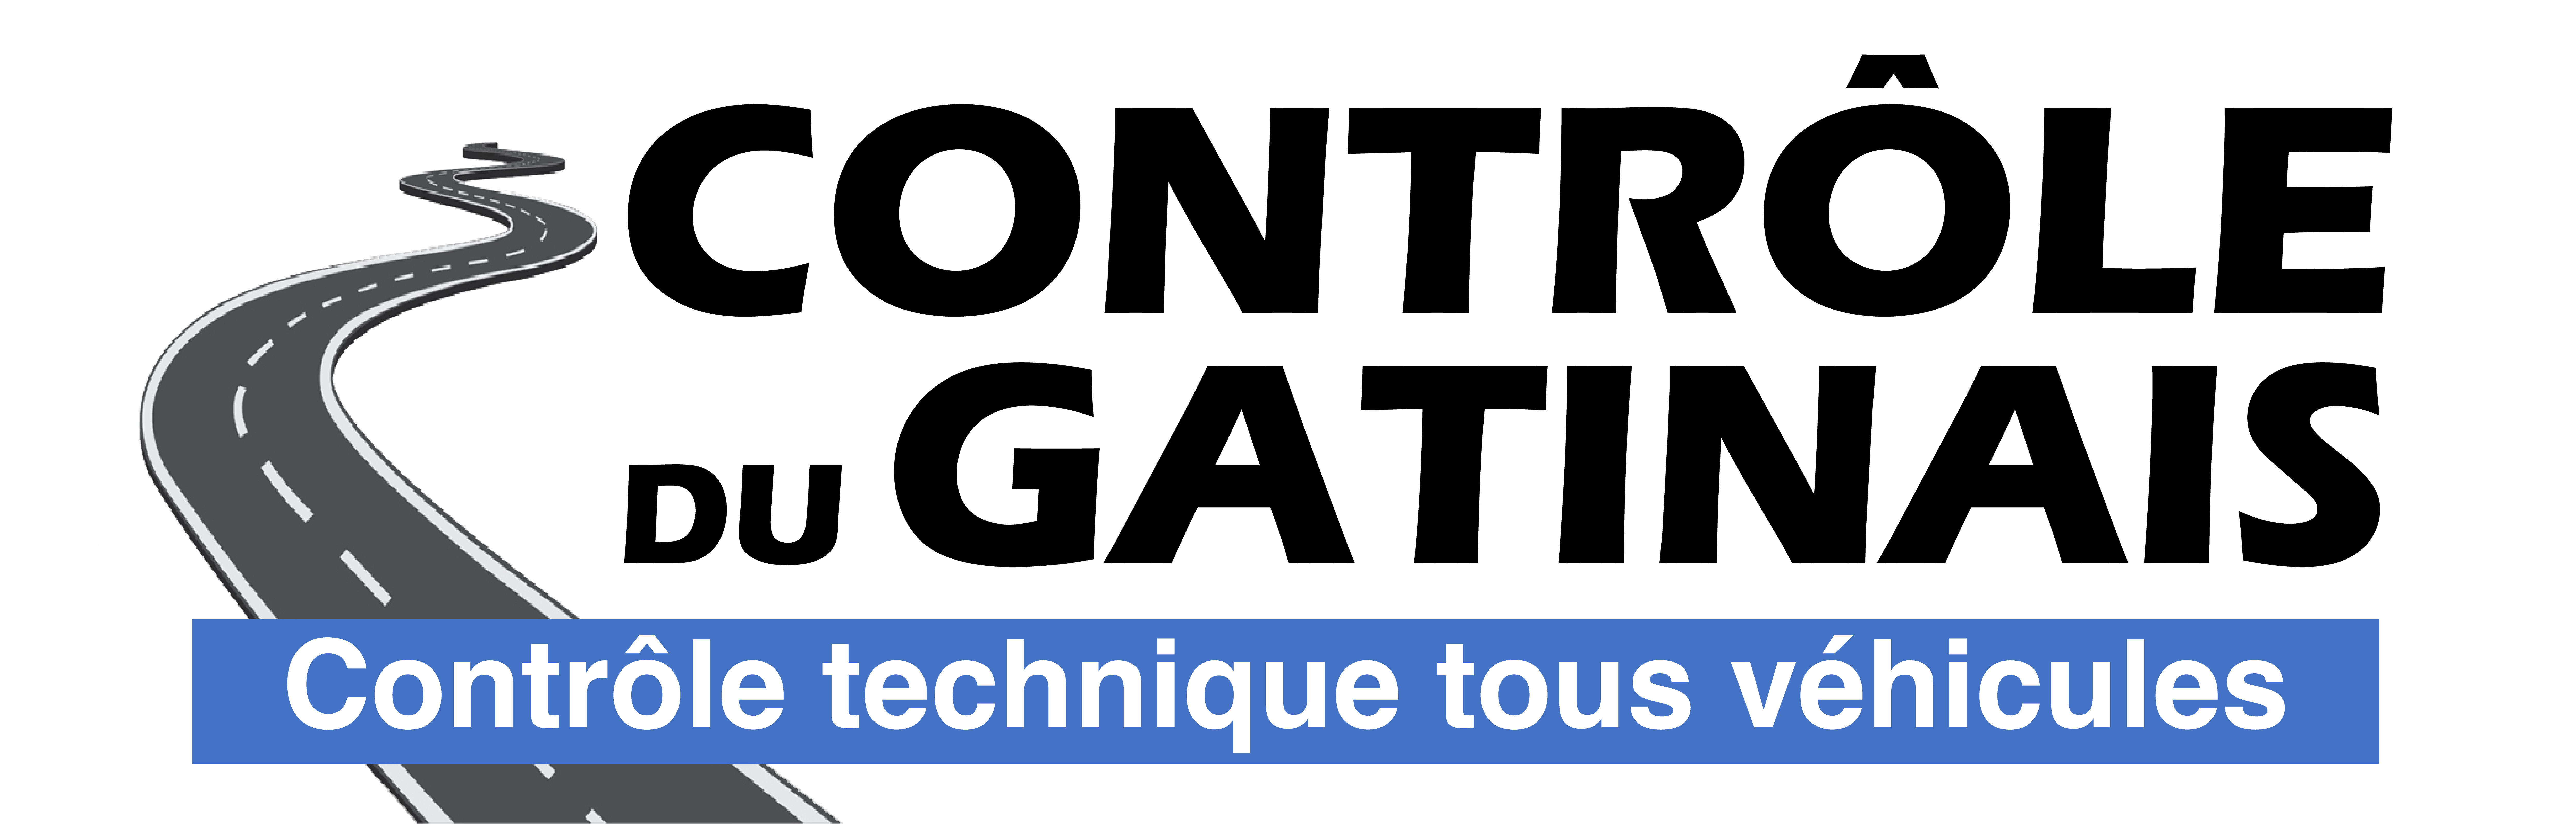 logo_CONTROLE DU GATINAIS